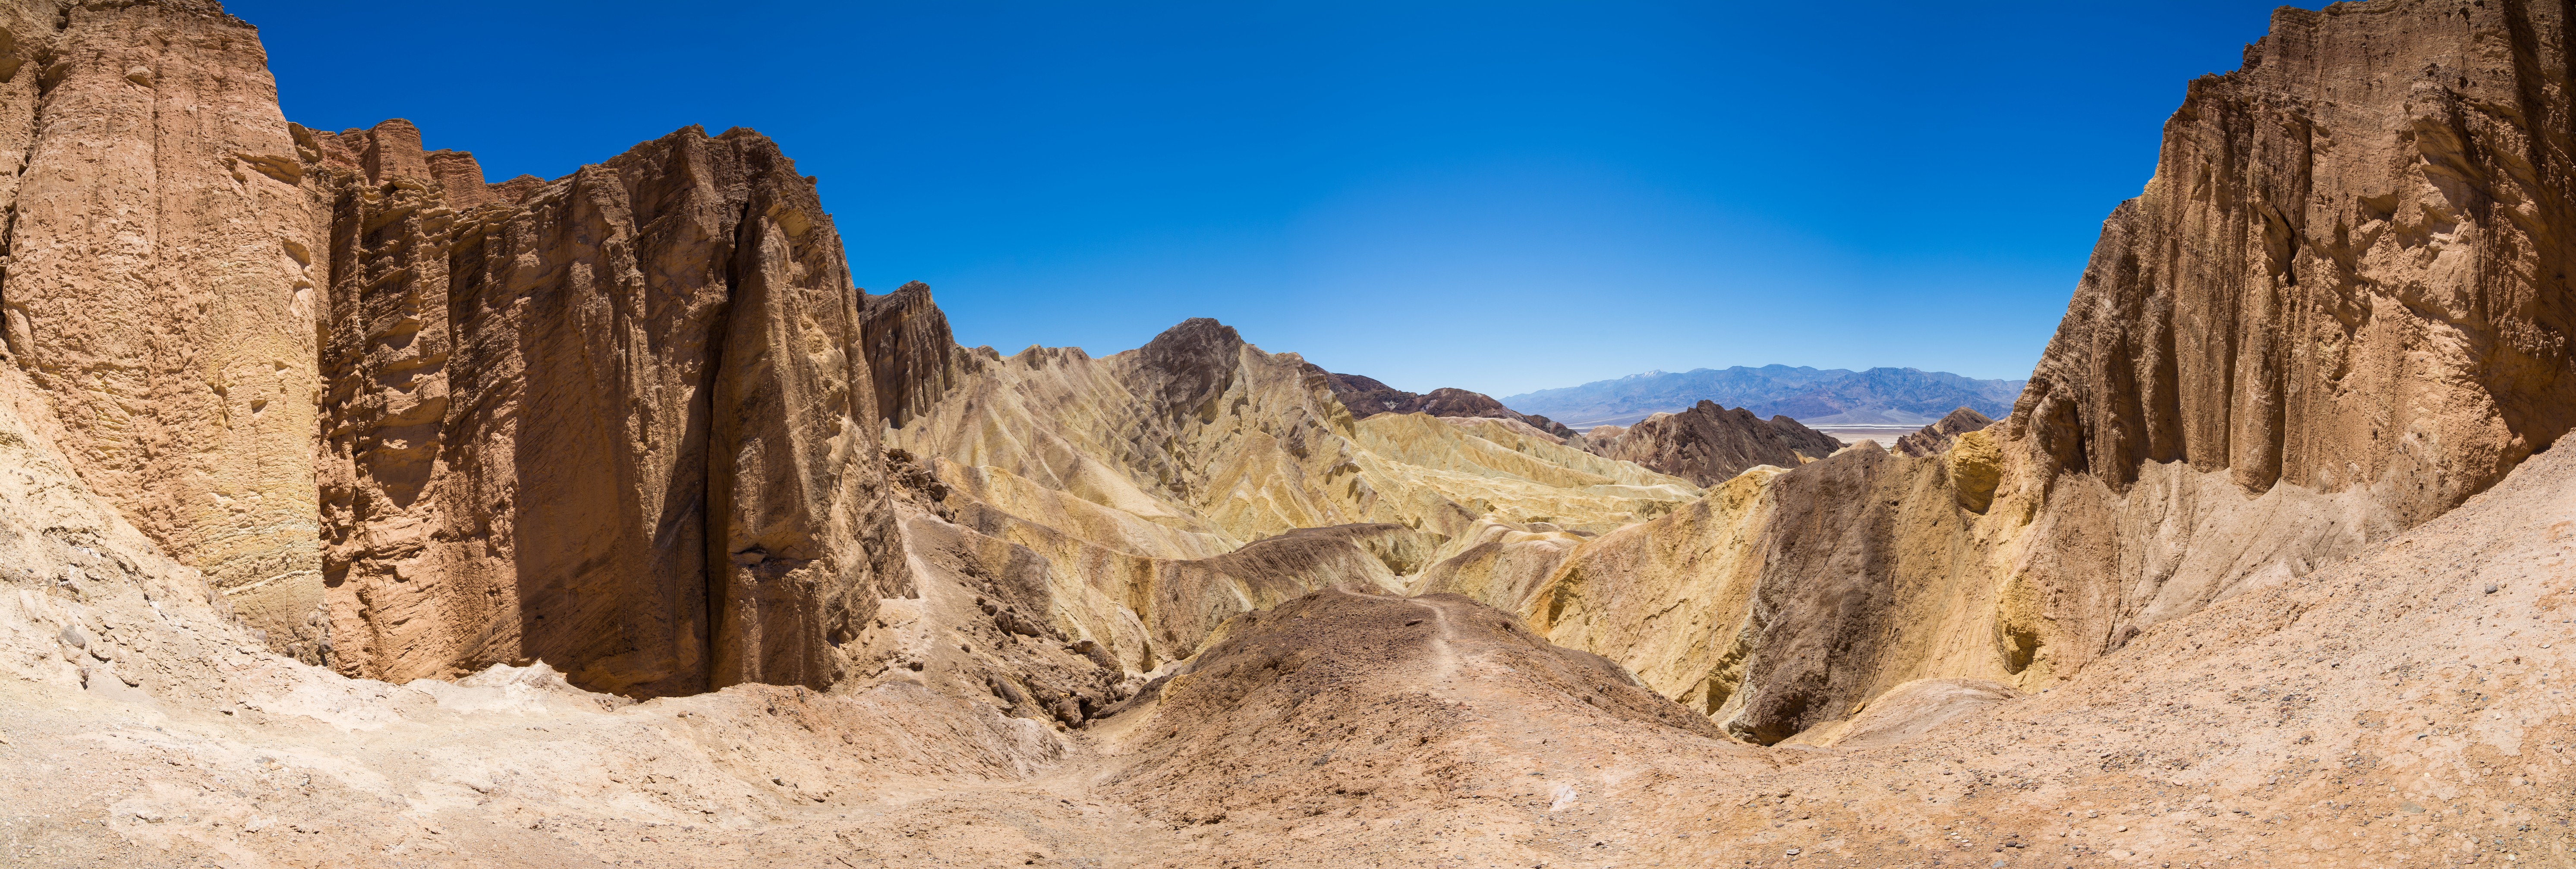 General 5970x2013 desert mountains landscape rocks